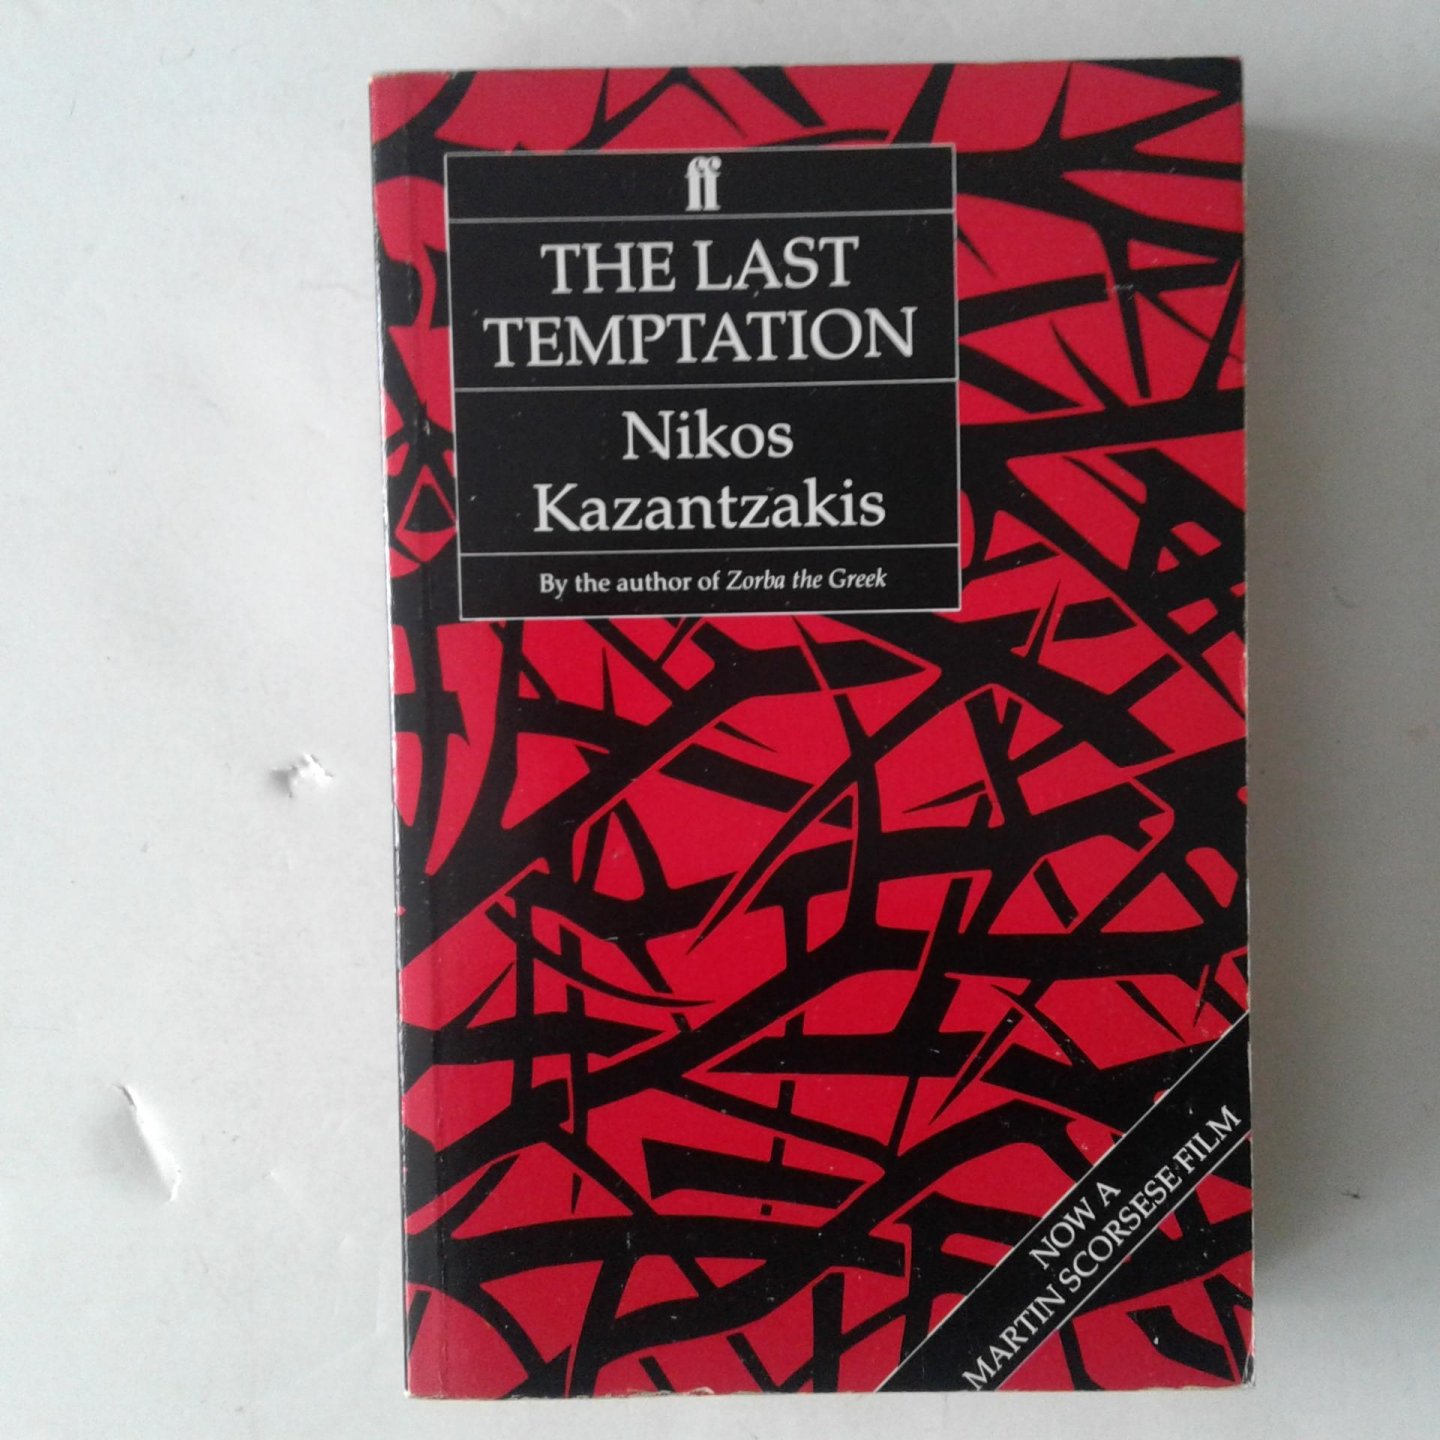 Kazantzakis, Nikos - The Last Temptation